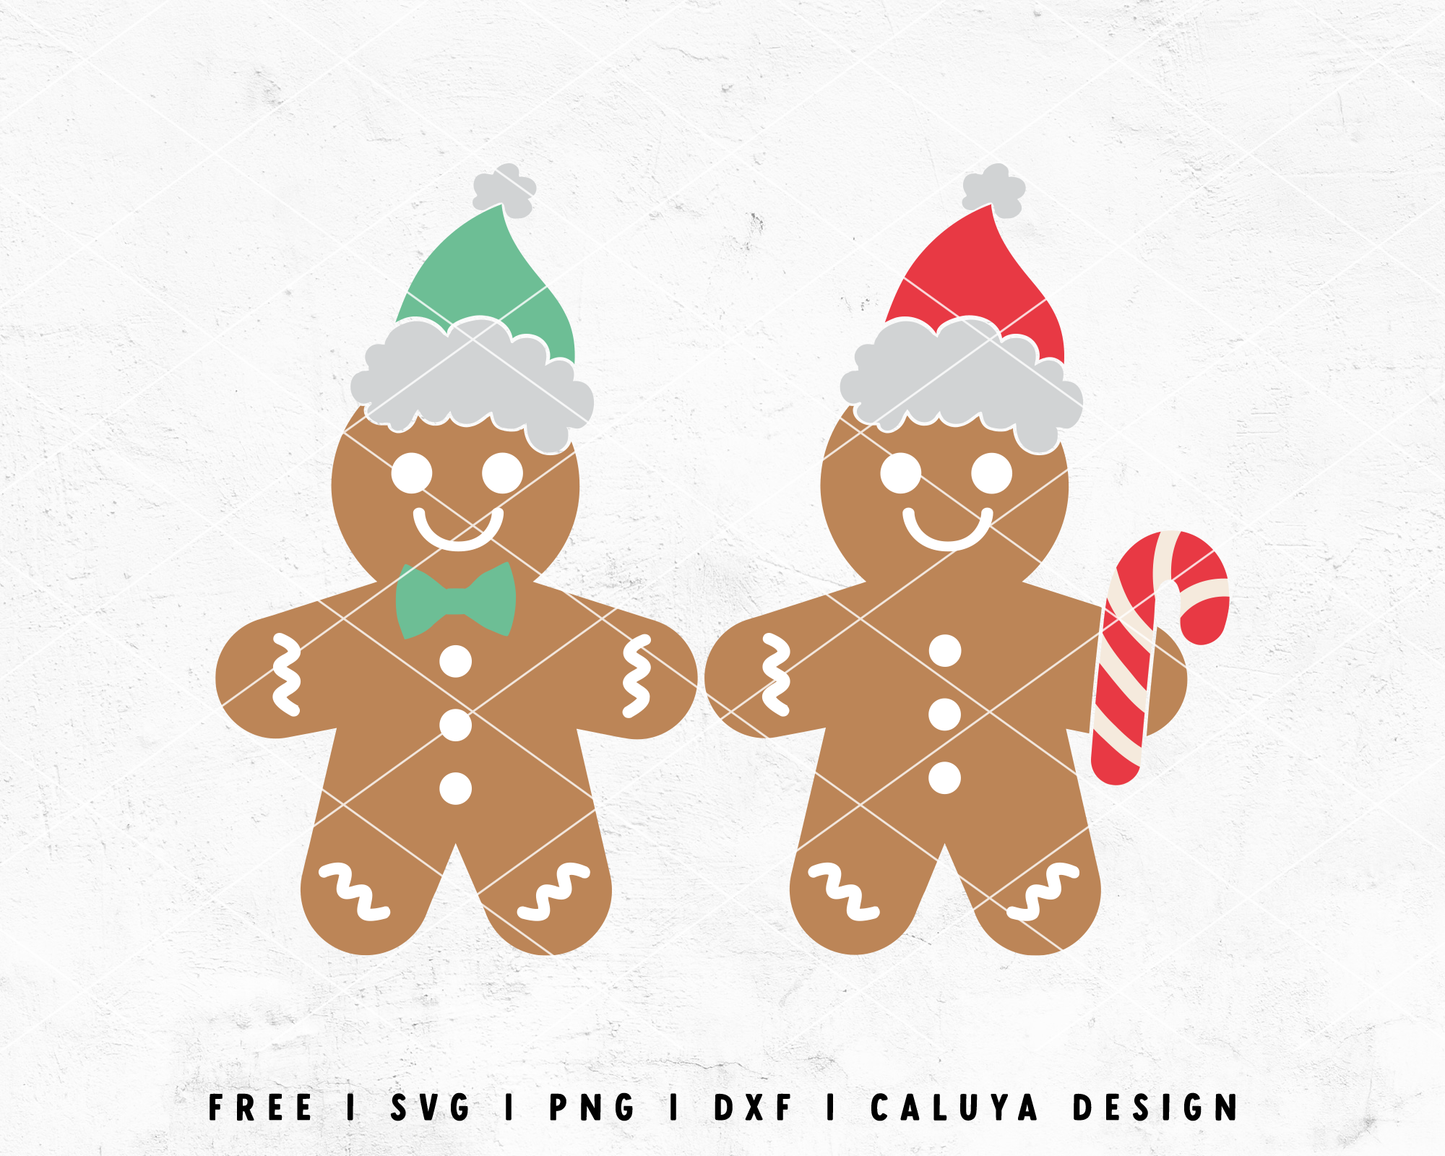 FREE Santa Gingerbread Man SVG | Cute Christmas SVG Cut File for Cricut, Cameo Silhouette | Free SVG Cut File